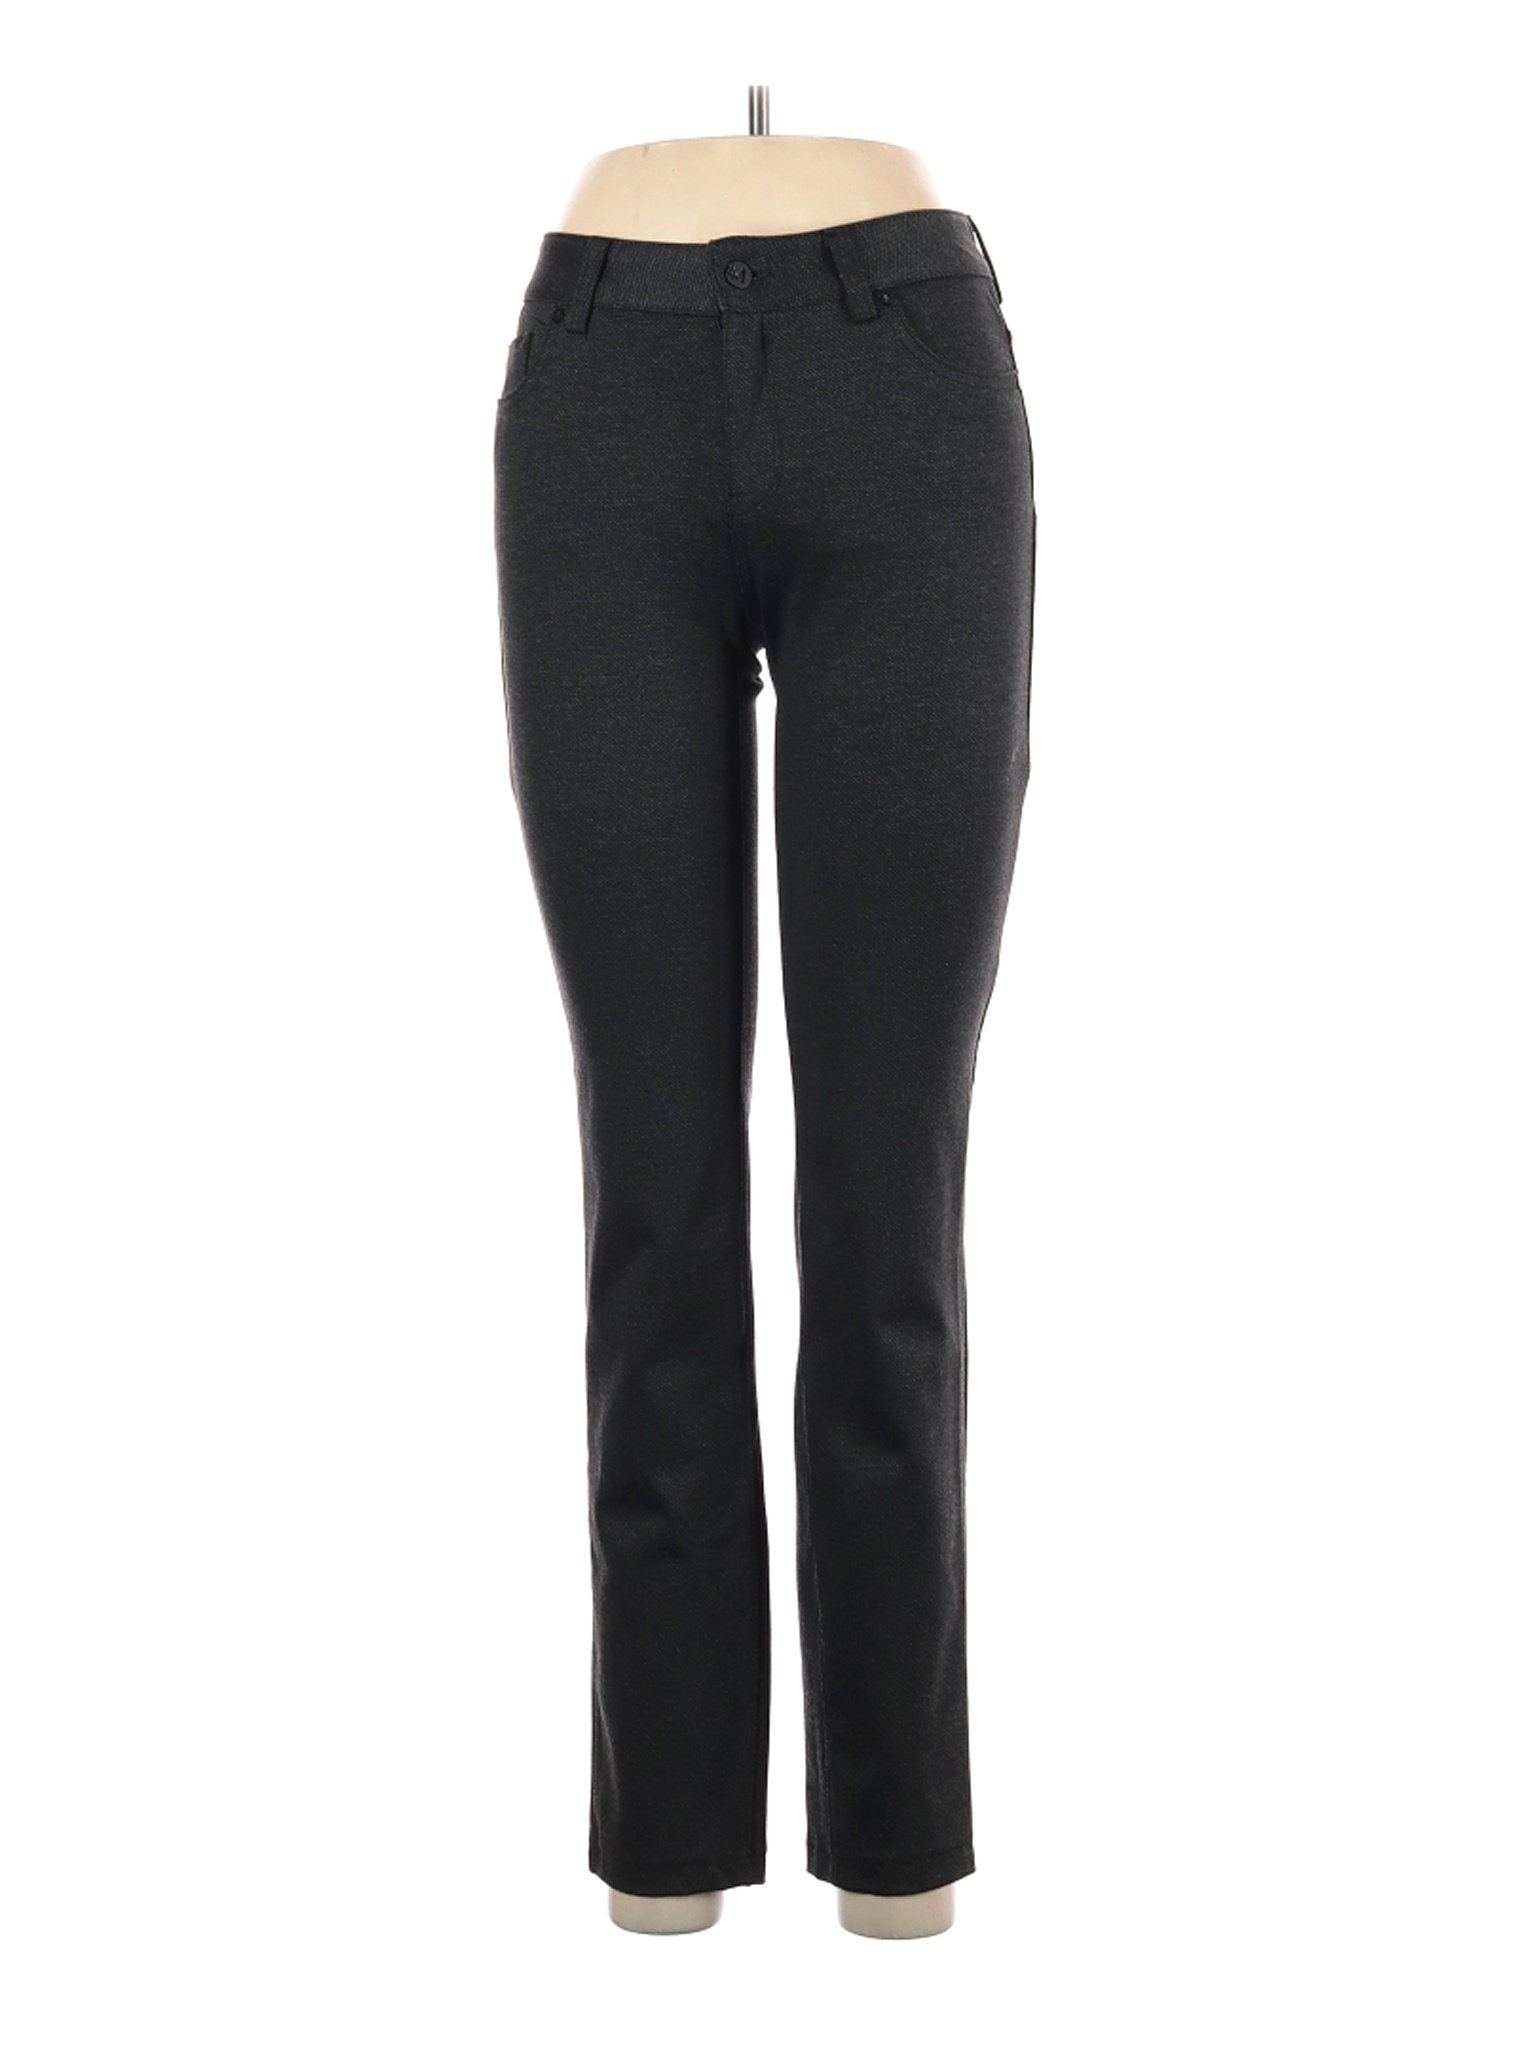 Andrew Marc Women Black Casual Pants 2 | eBay